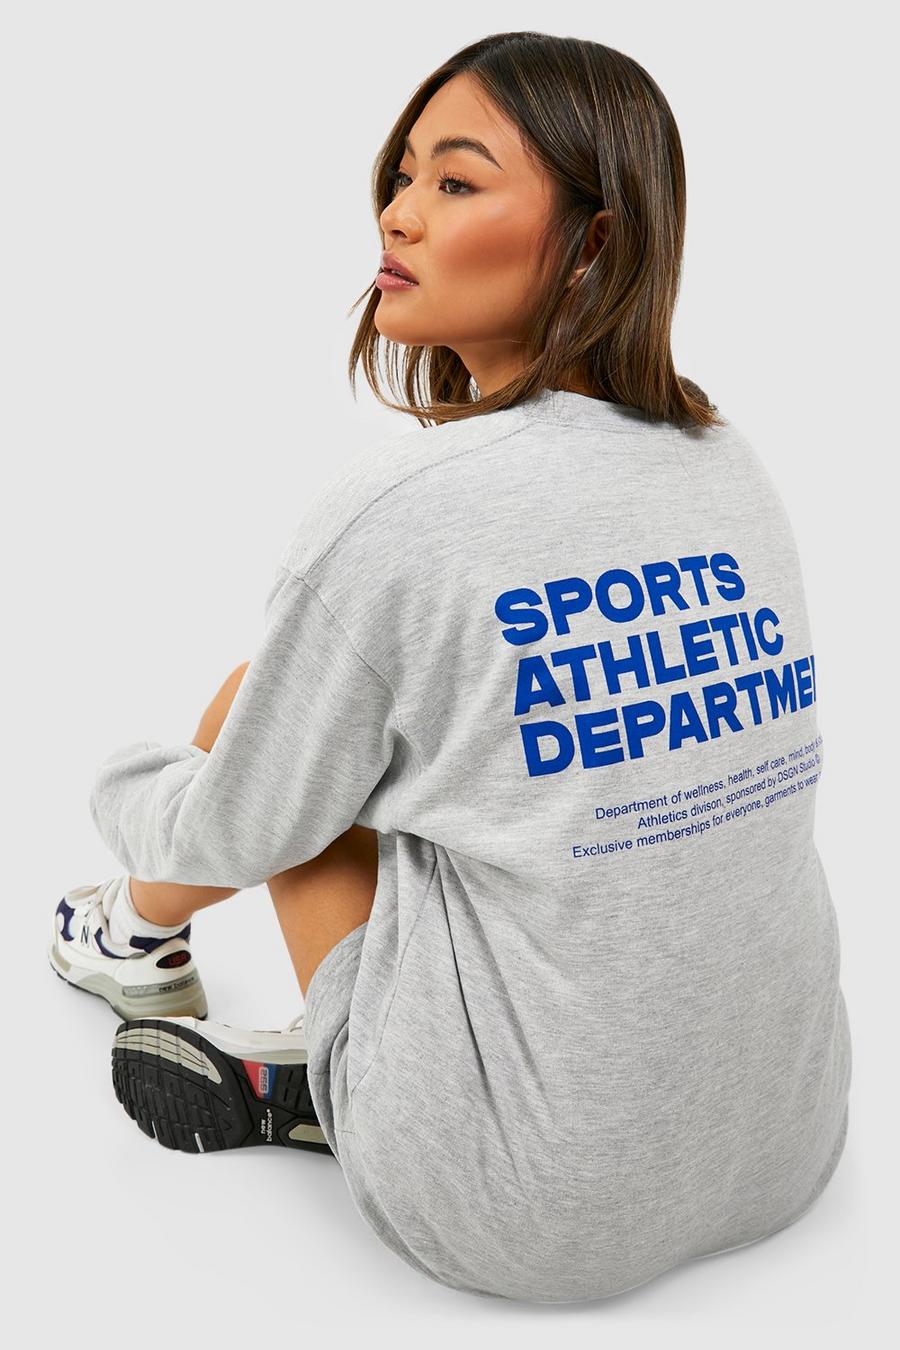 Oversize Sweatshirt mit Sports Athletic Slogan, Grey marl grau